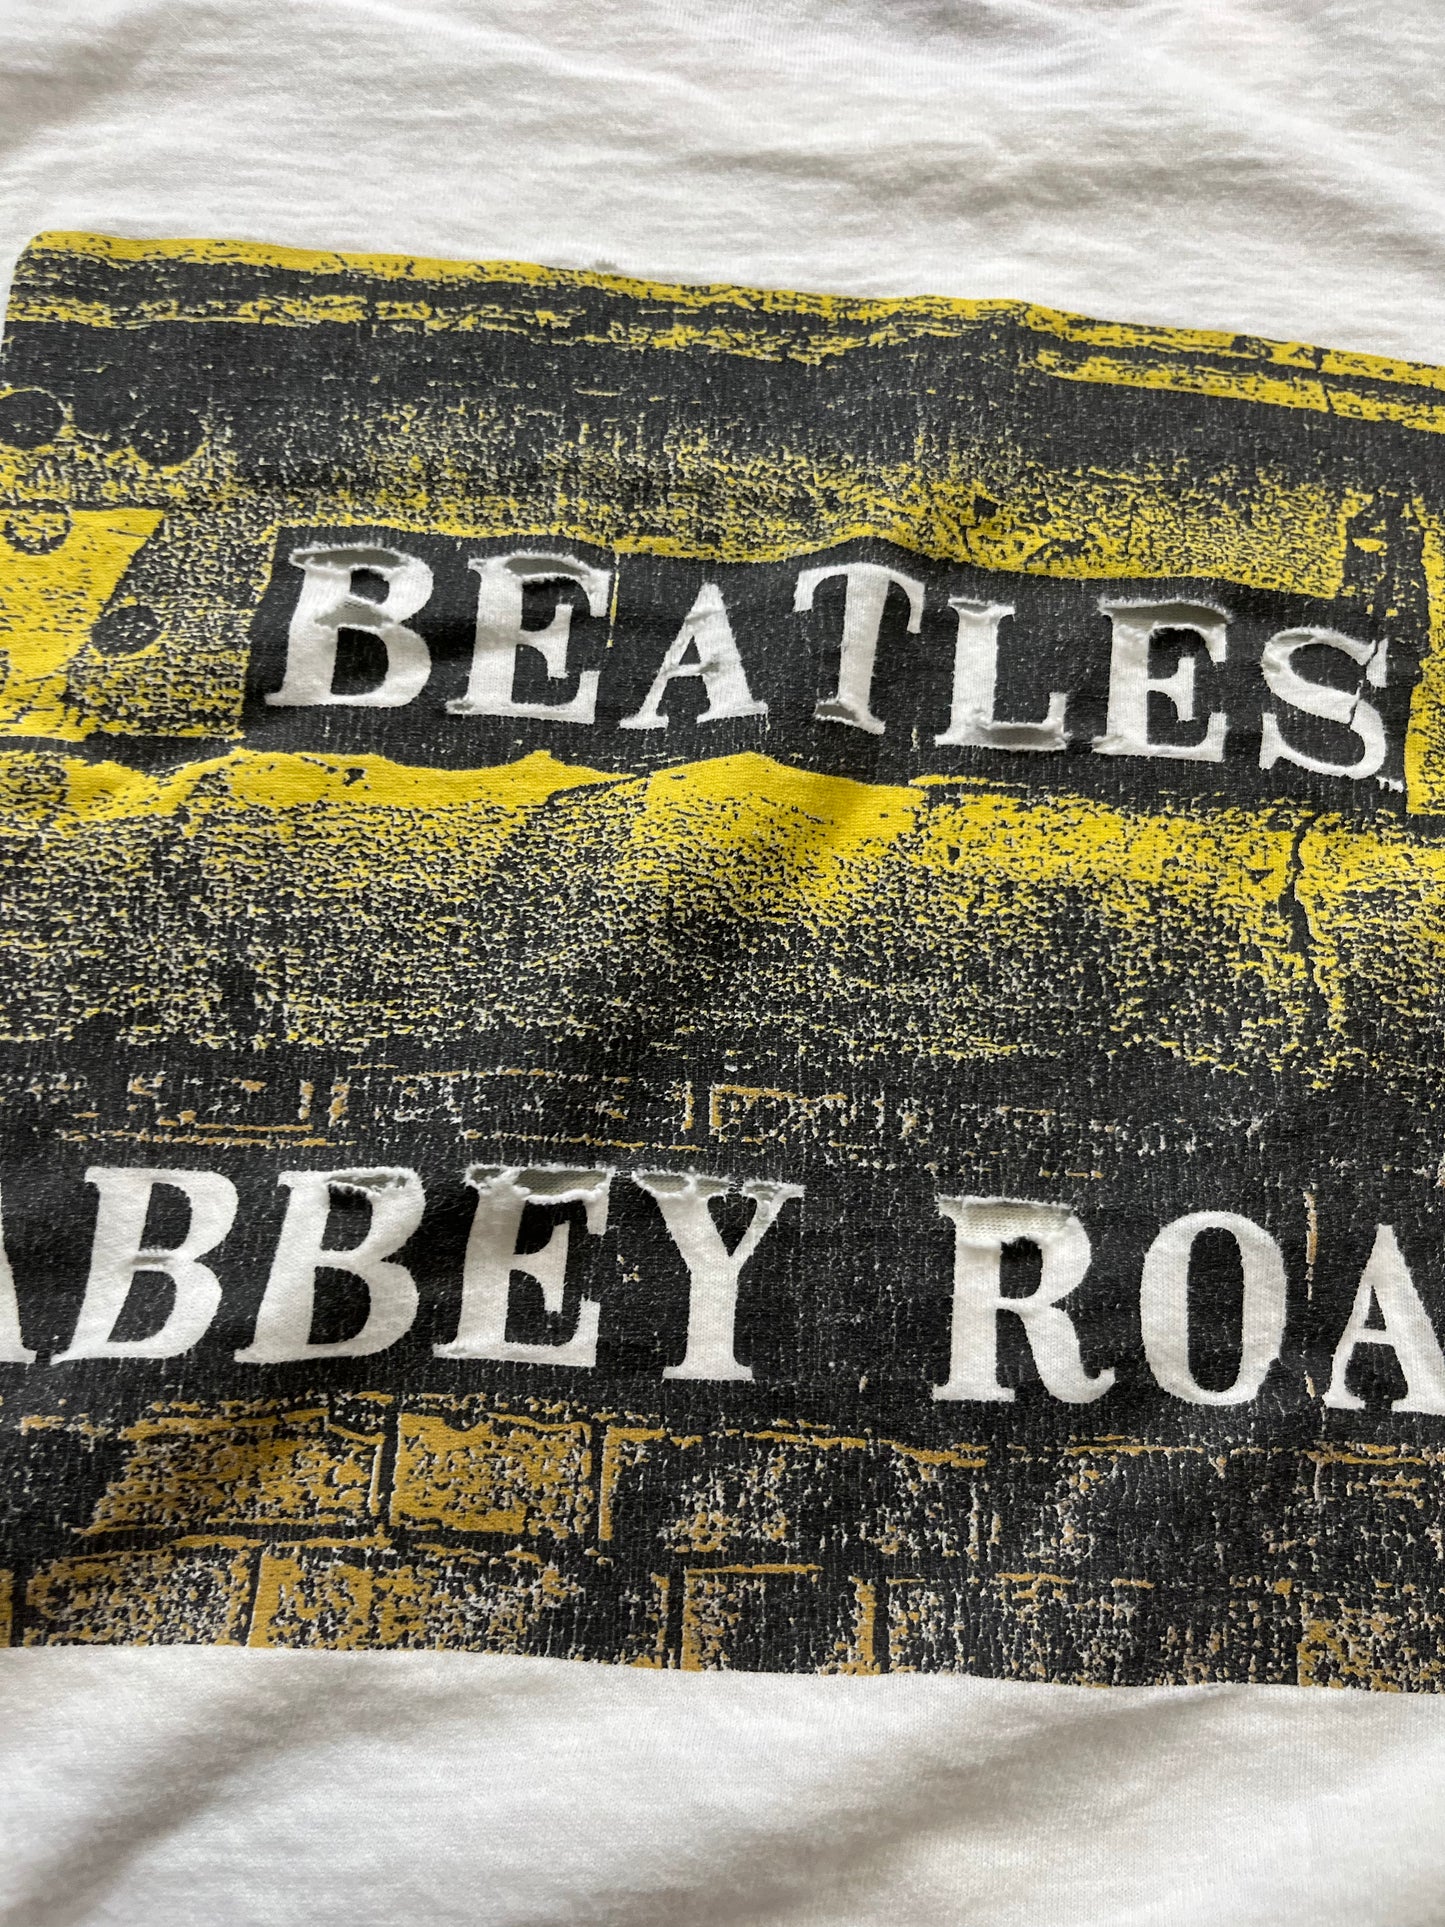 1990 Beatles “Abbey Road” Tee